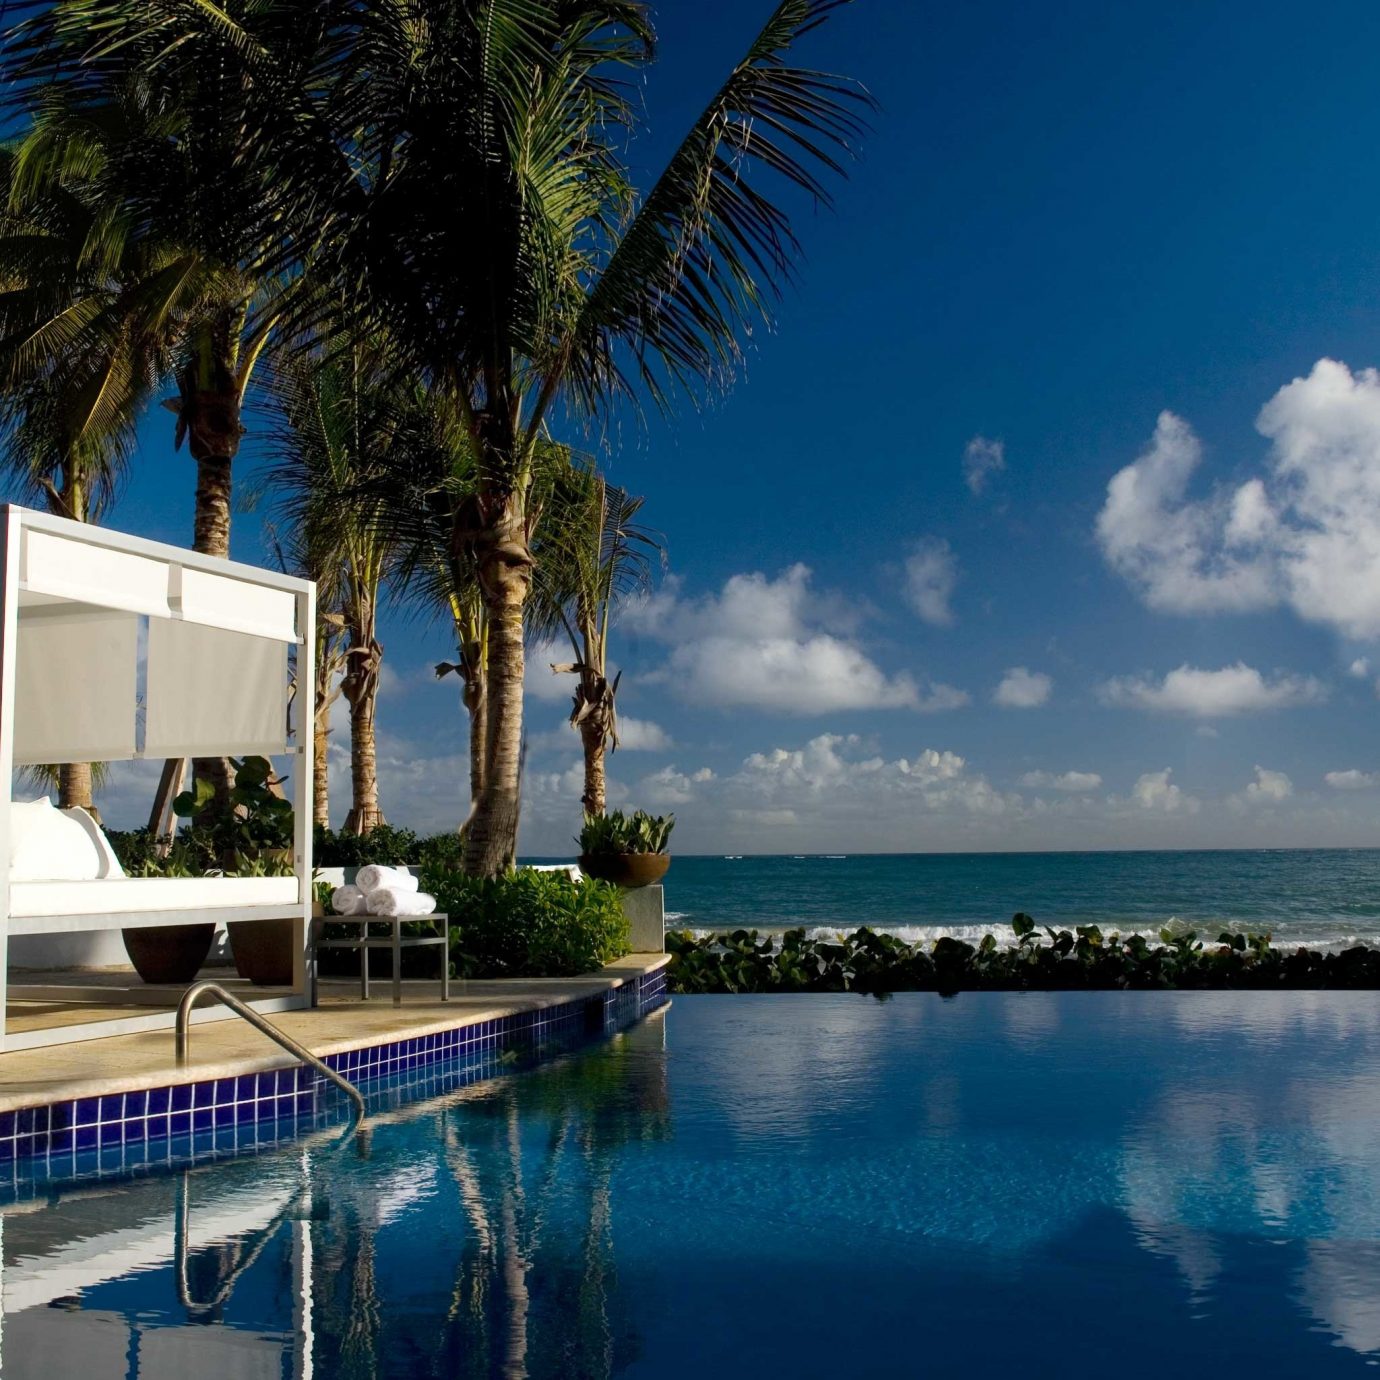 Beachfront Hotels Modern Pool Resort Romance Scenic views tree sky water swimming pool arecales Sea marina